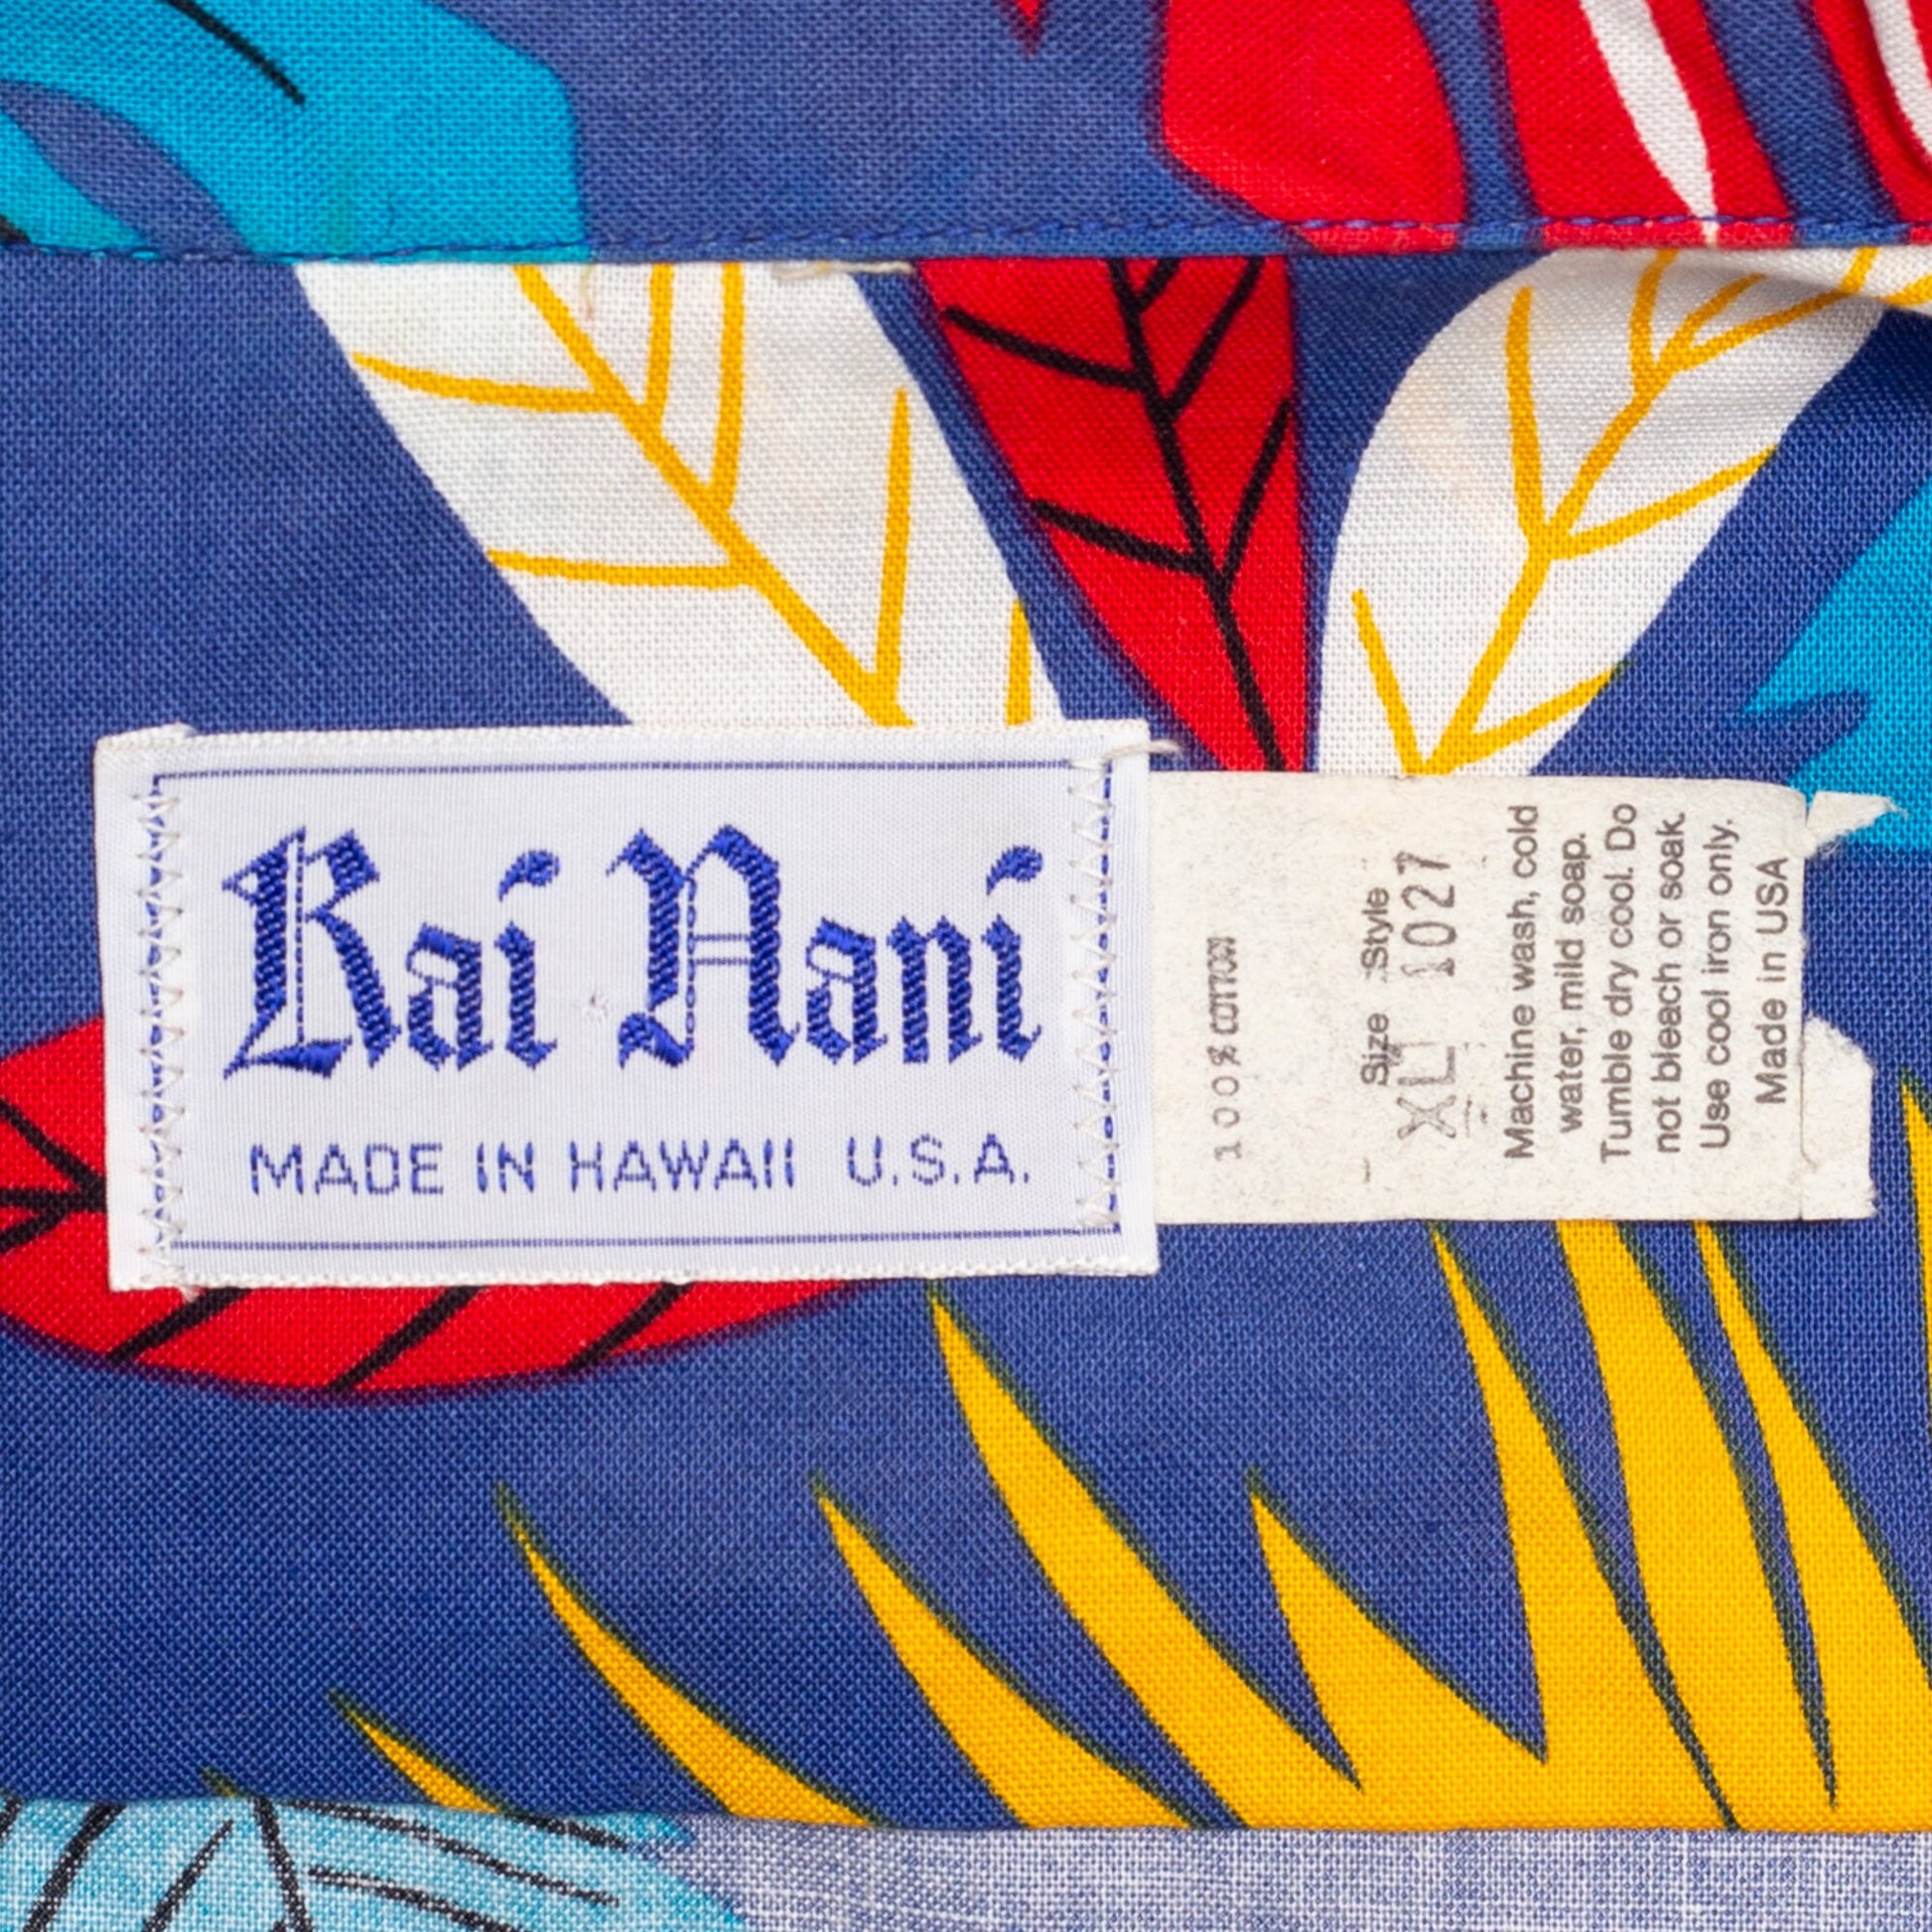 70s Rai Nani Hawaiian Aloha Shirt - Men's XL | Vintage Wooden Button Blue Tropical Leaf Print Notched Collar Top